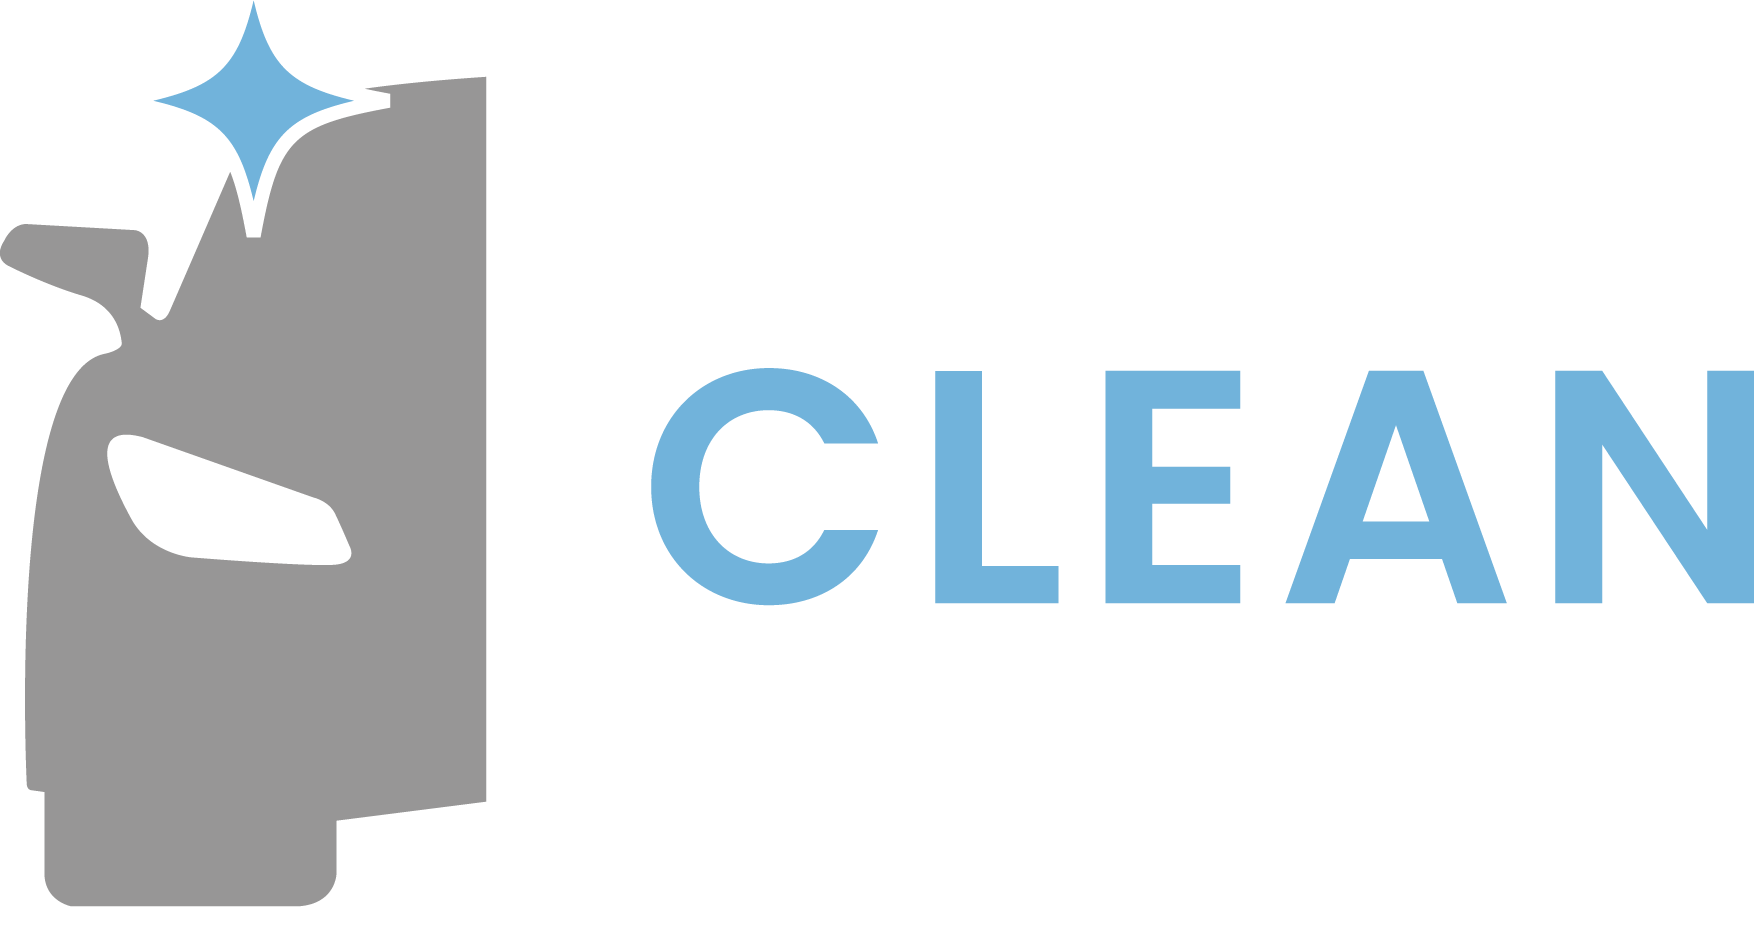 EasyCleanCar